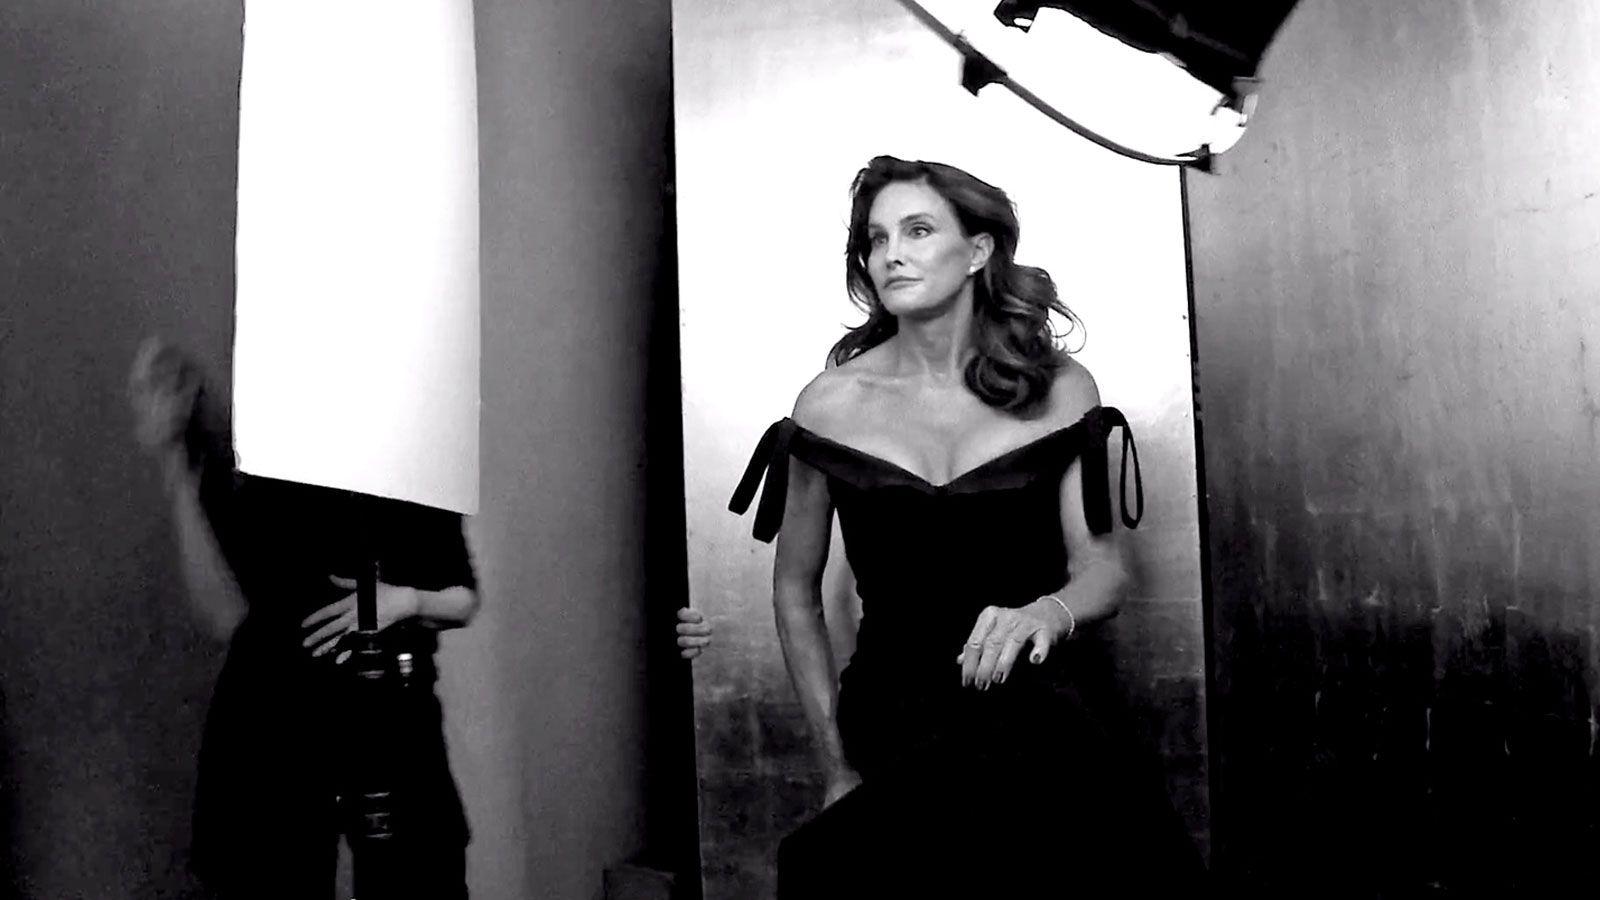 Caitlyn Jenner during the Vanity Fair Photohoot